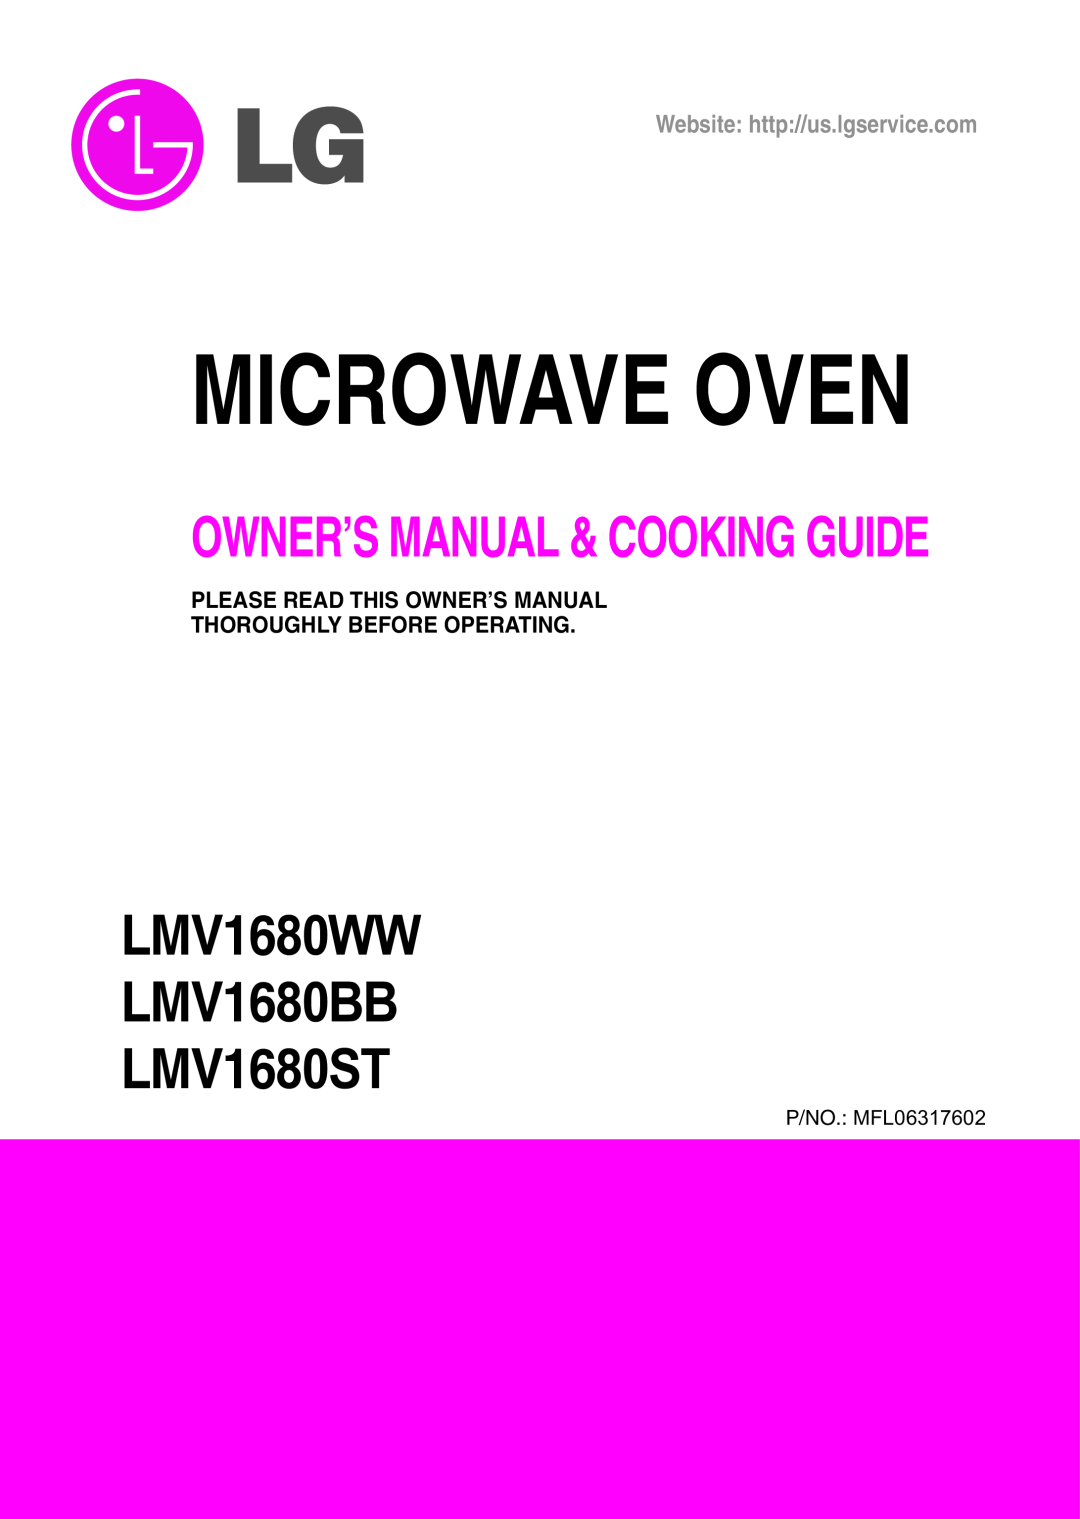 LG Electronics LMV1680BB, LMV1680WW, LMV1680ST owner manual Thoroughly Before Operating, P/NO. MFL06317602, Microwave Oven 